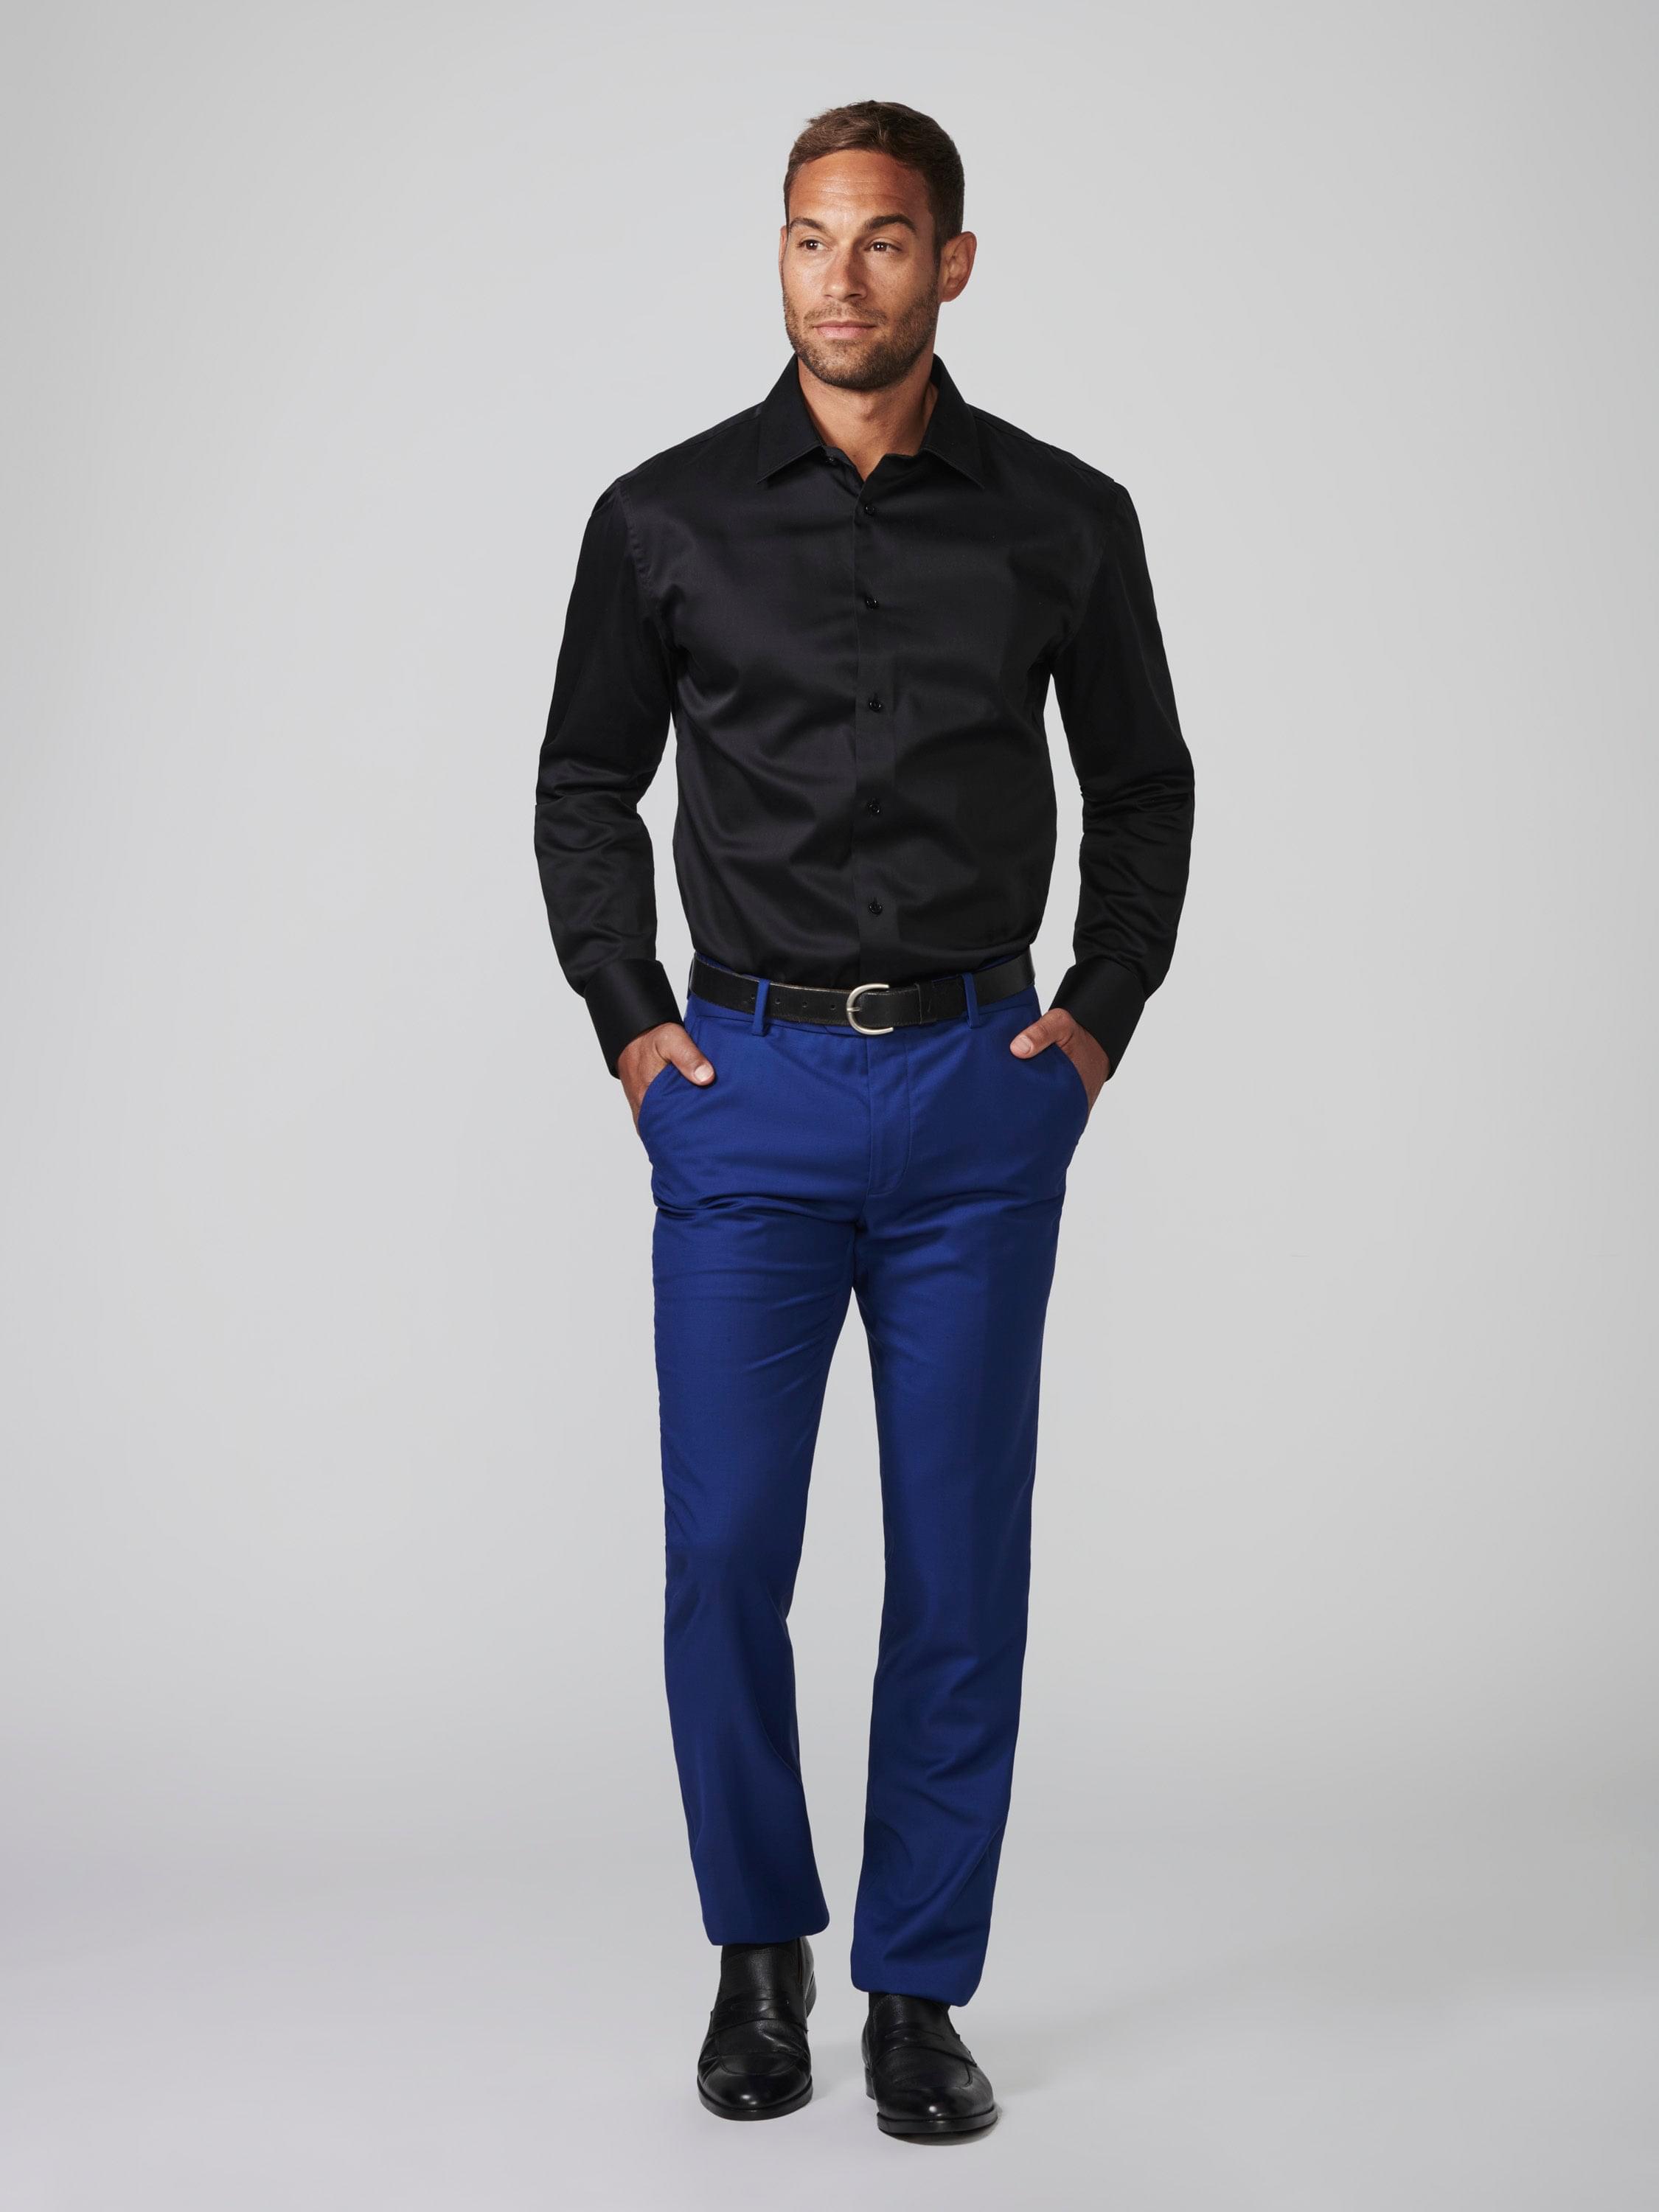 black dress pants with blue shirt